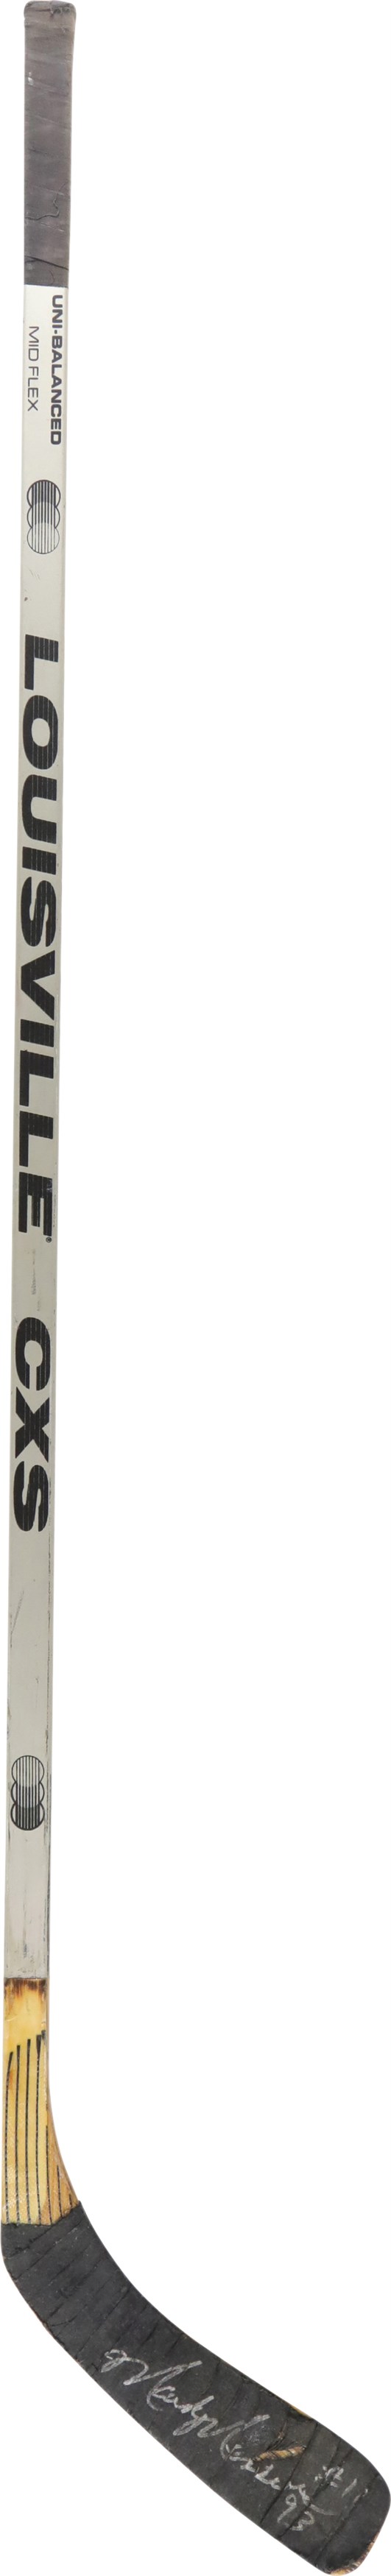 Hockey - 1993 Mark Messier New York Rangers Signed Game Used Stick (PSA)